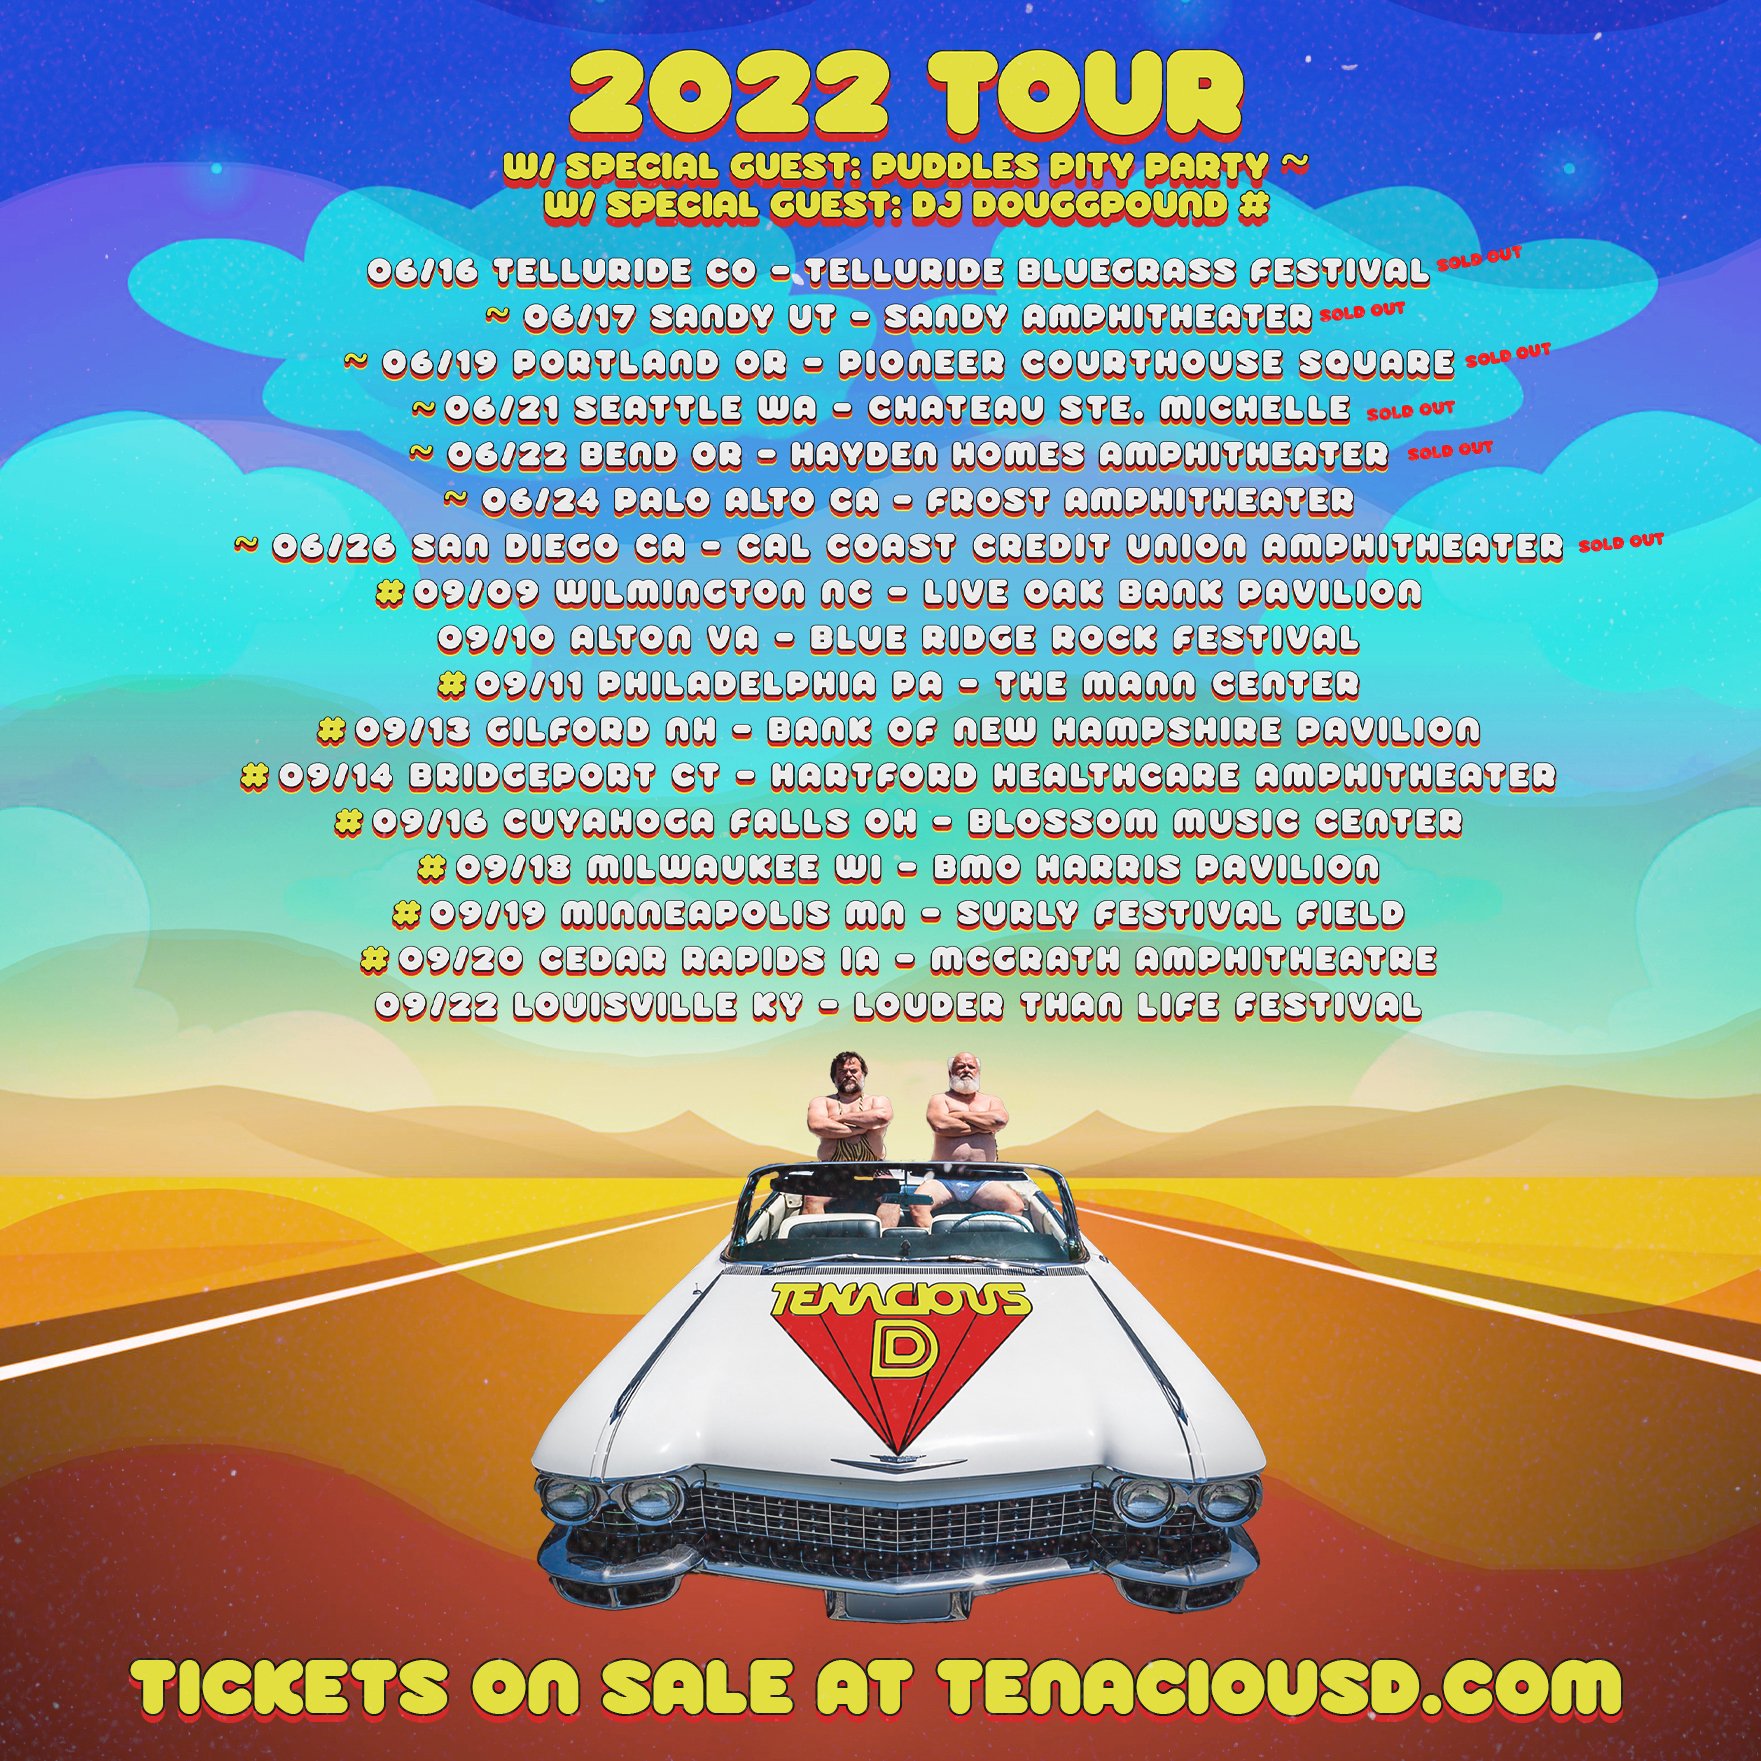 Tenacious D announce European tour dates for 2023